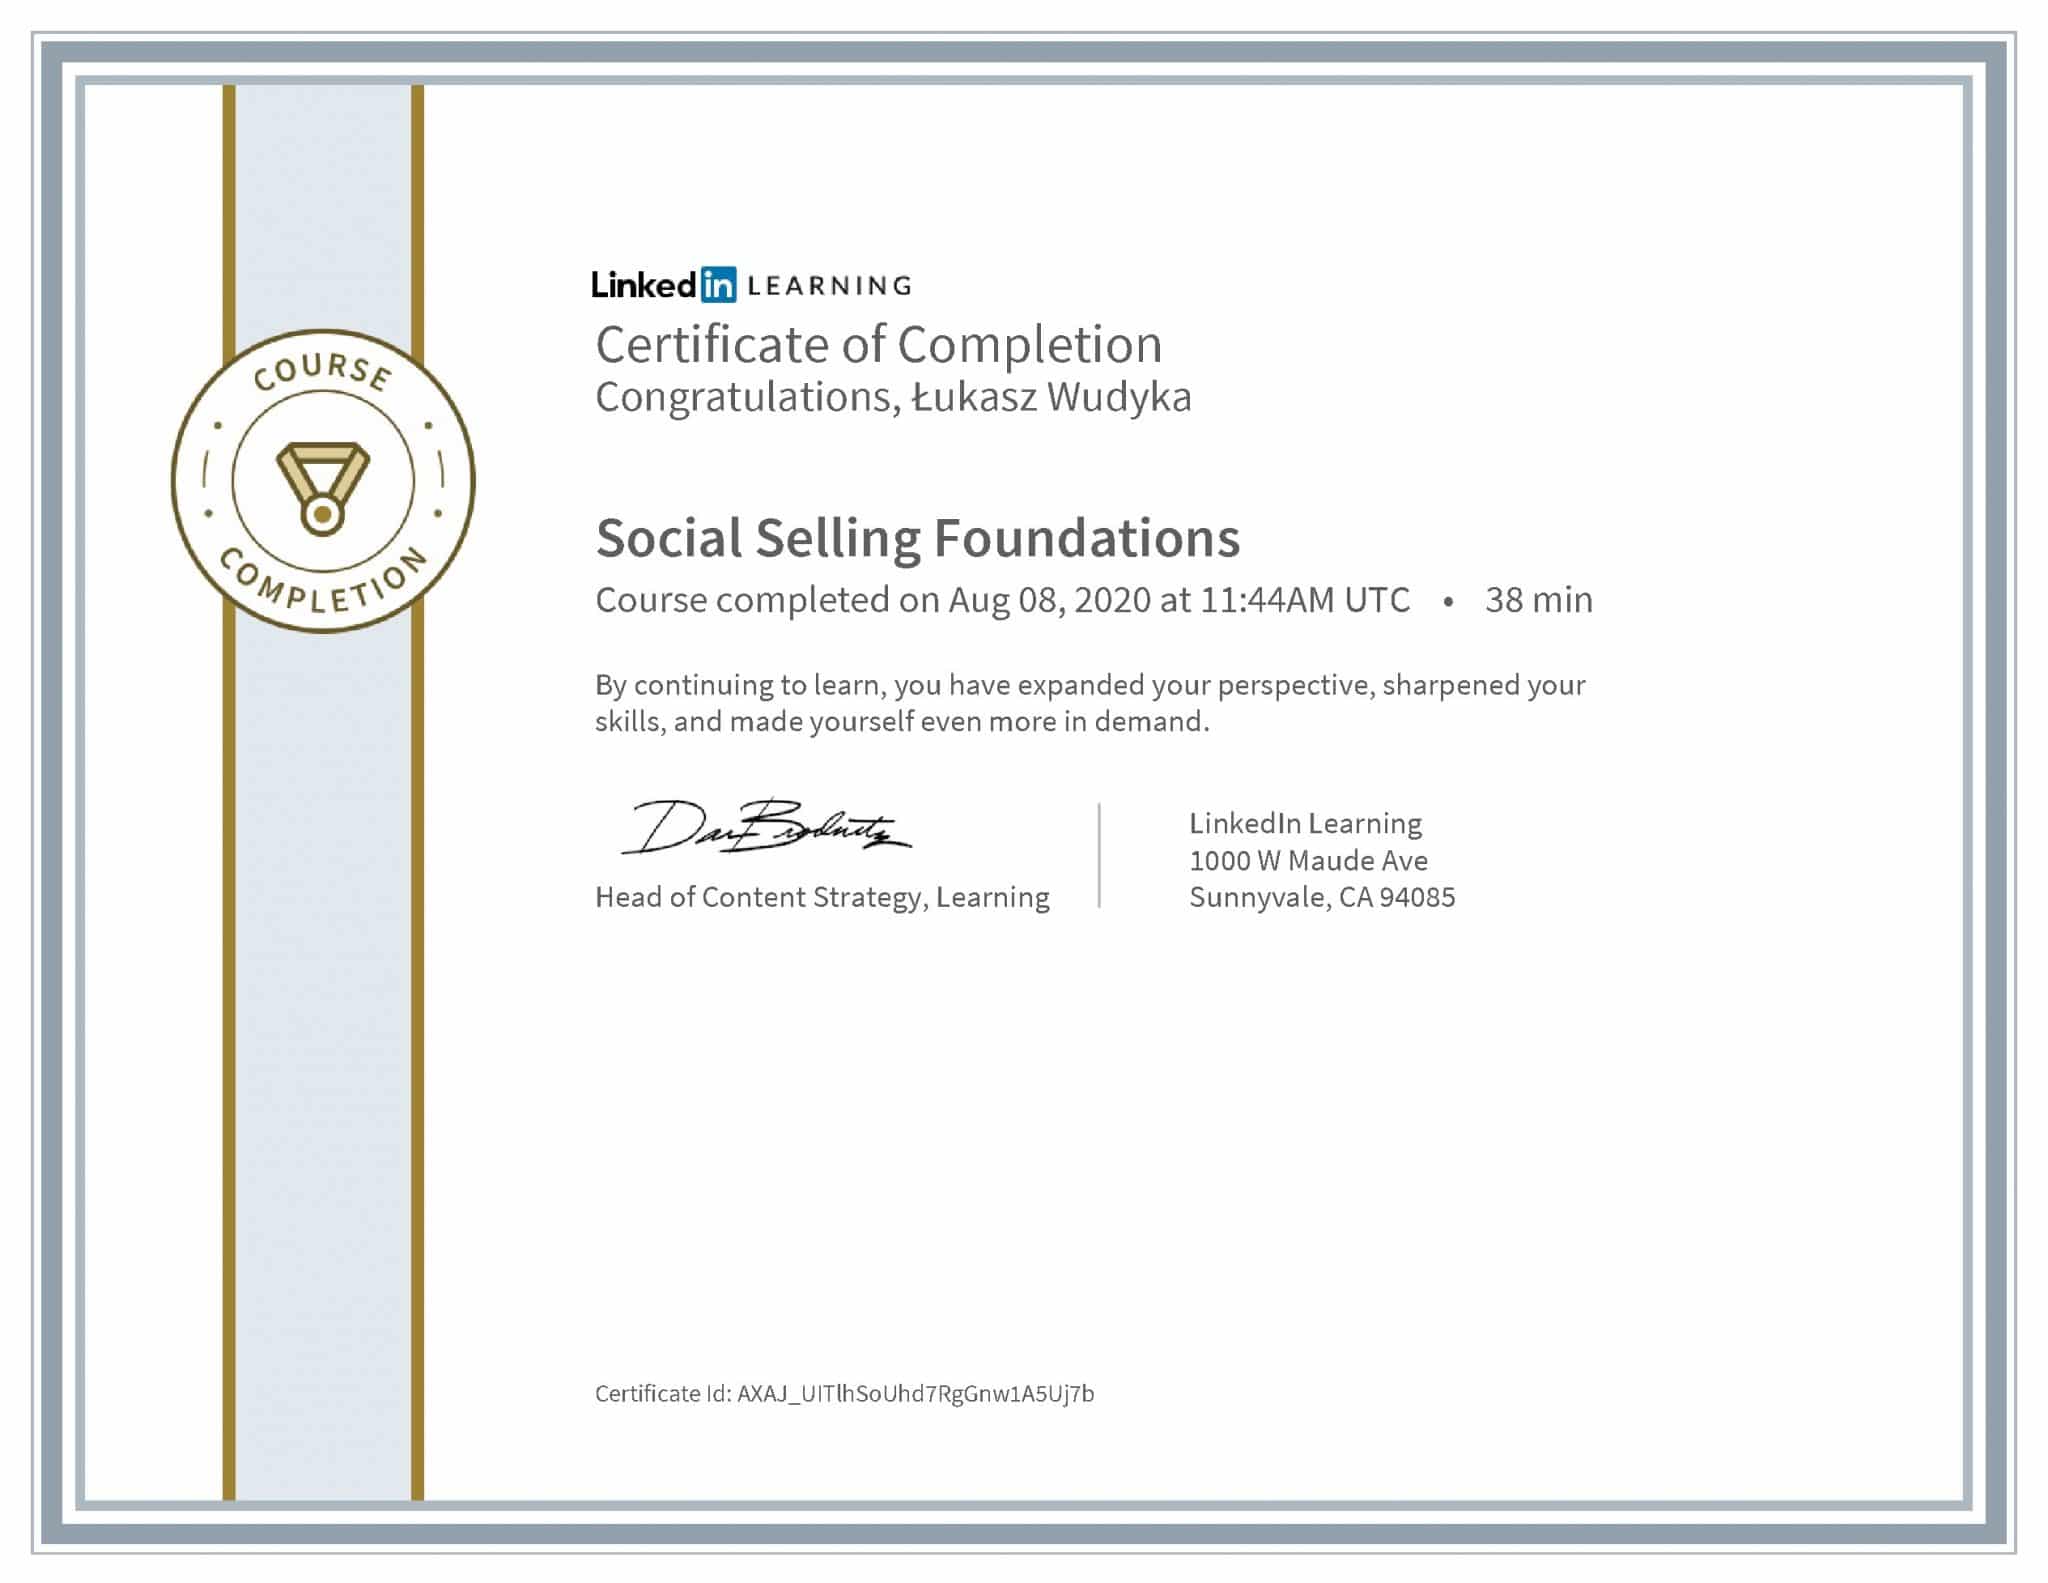 Łukasz Wudyka certyfikat LinkedIn Social Selling Foundations